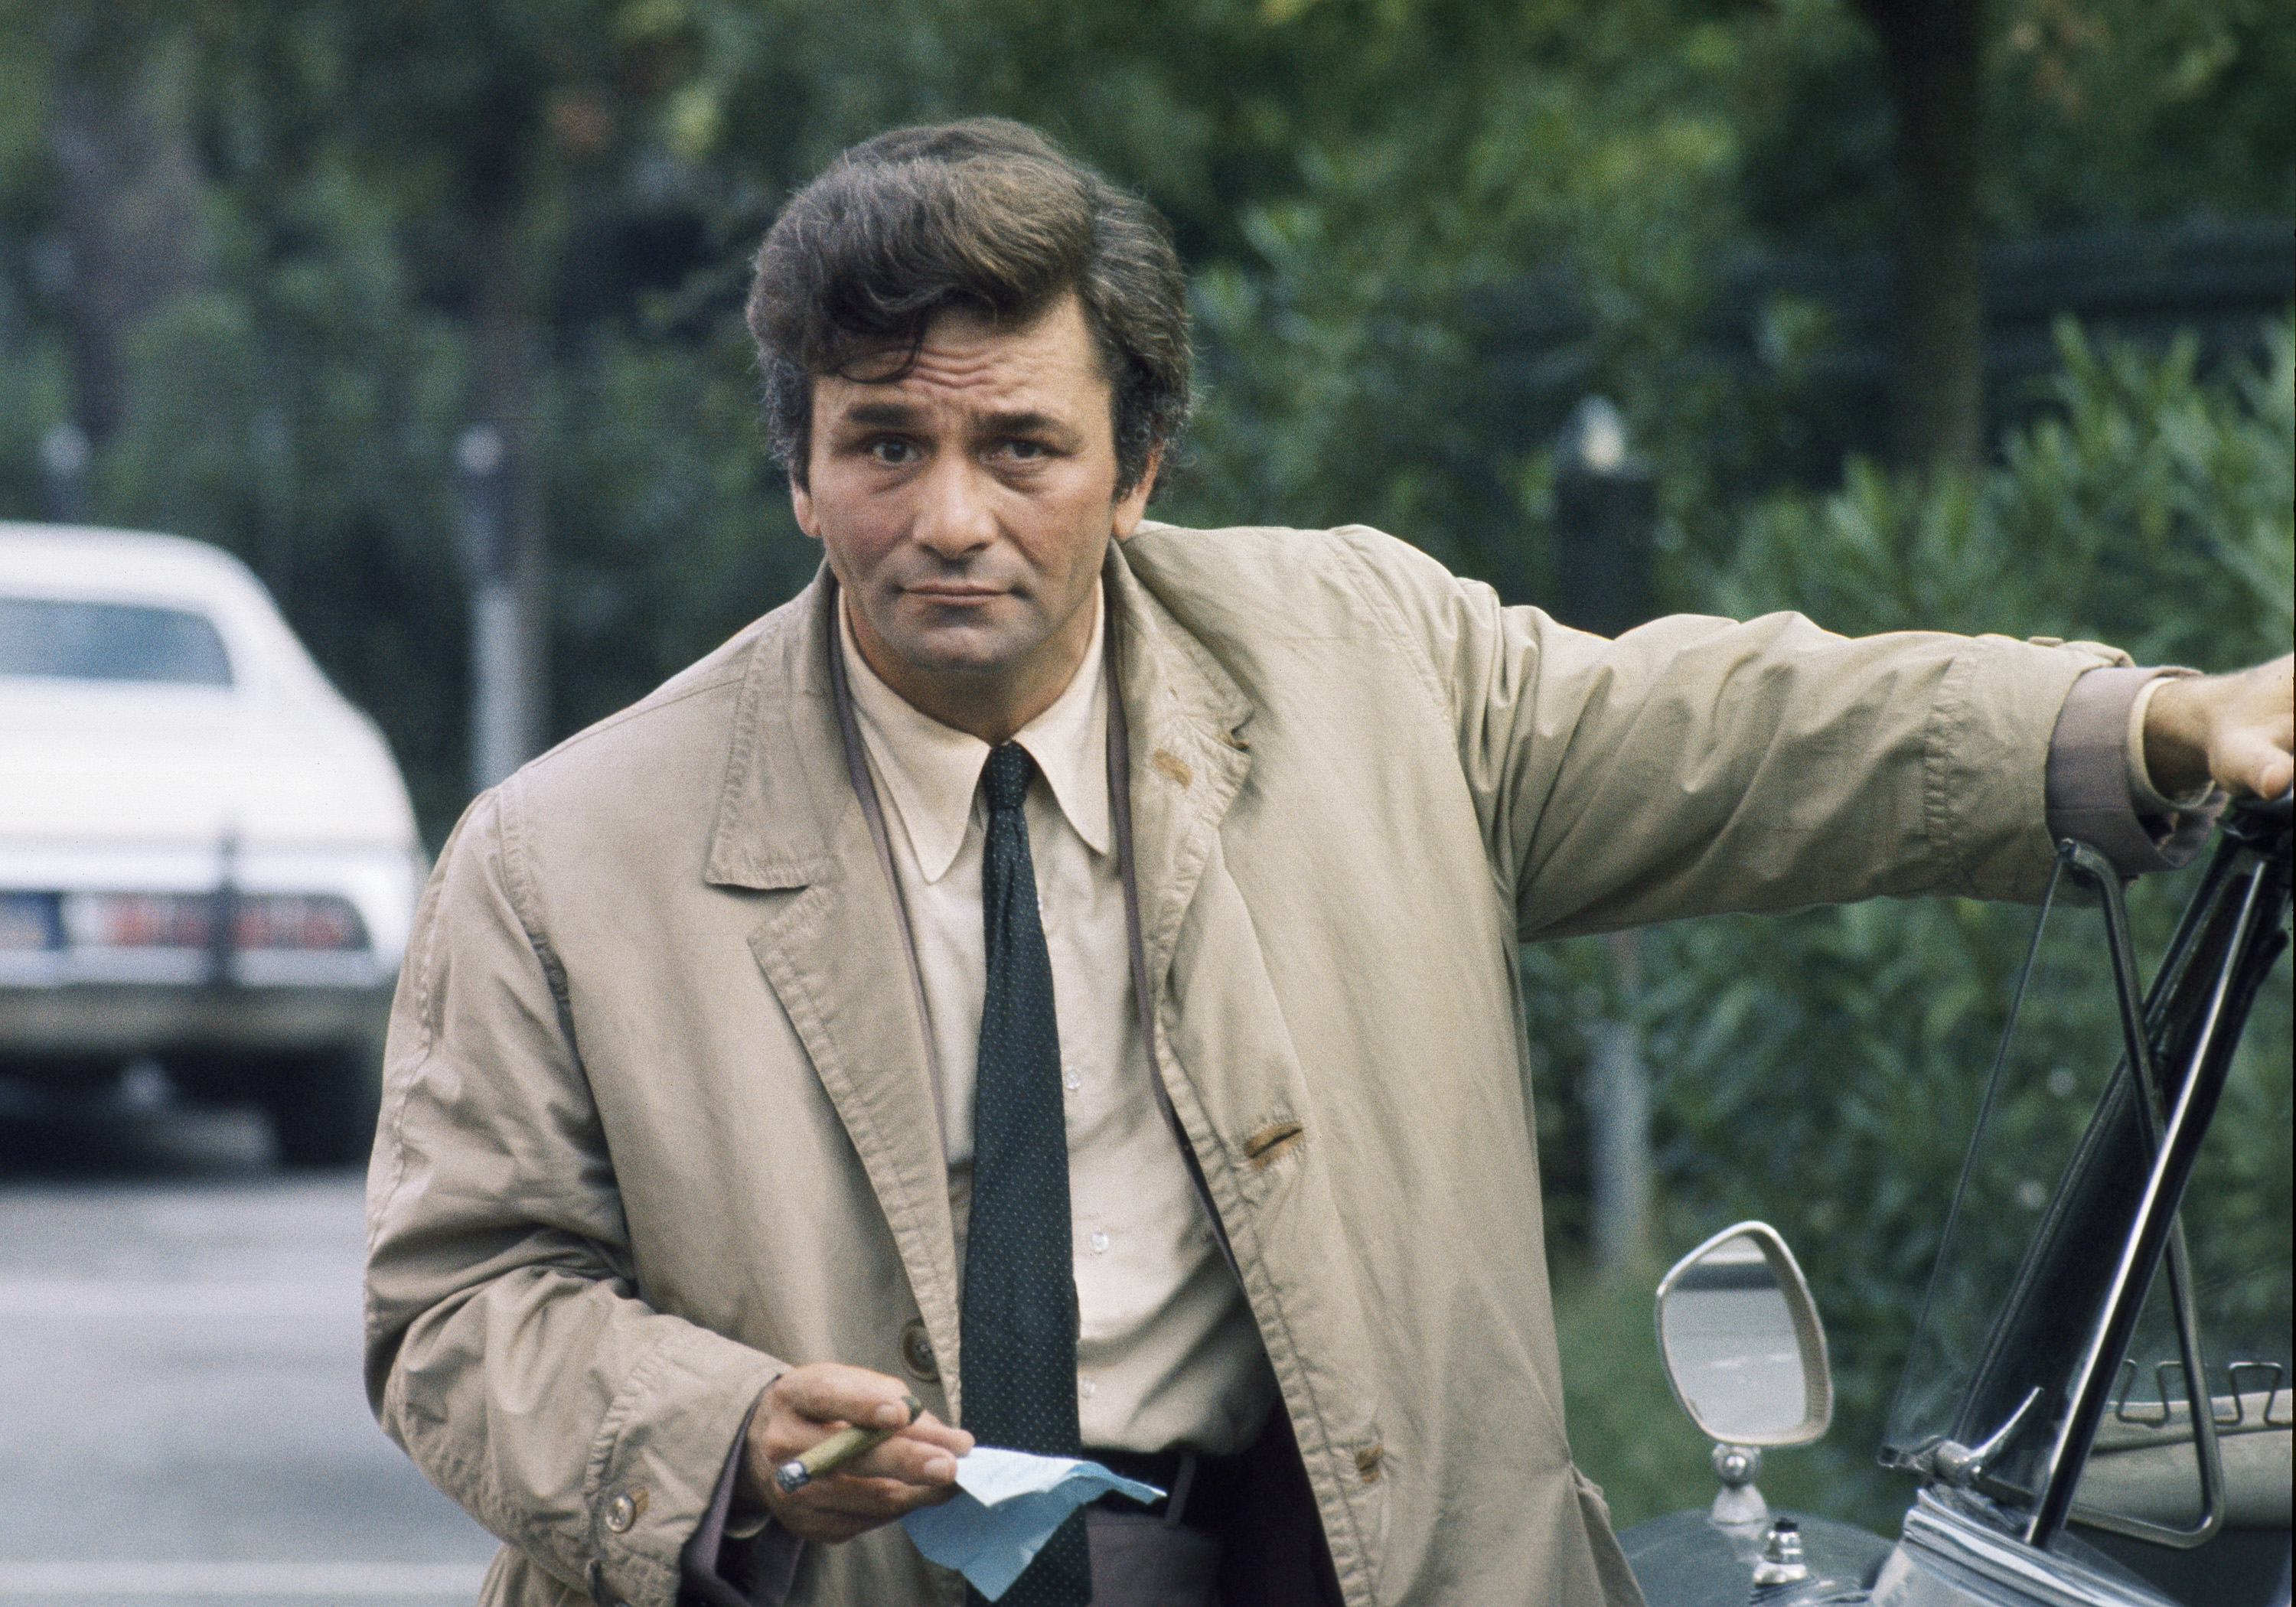 Peter Falk as Lieutenant Columbo, circa 1970 | Source: Getty Images